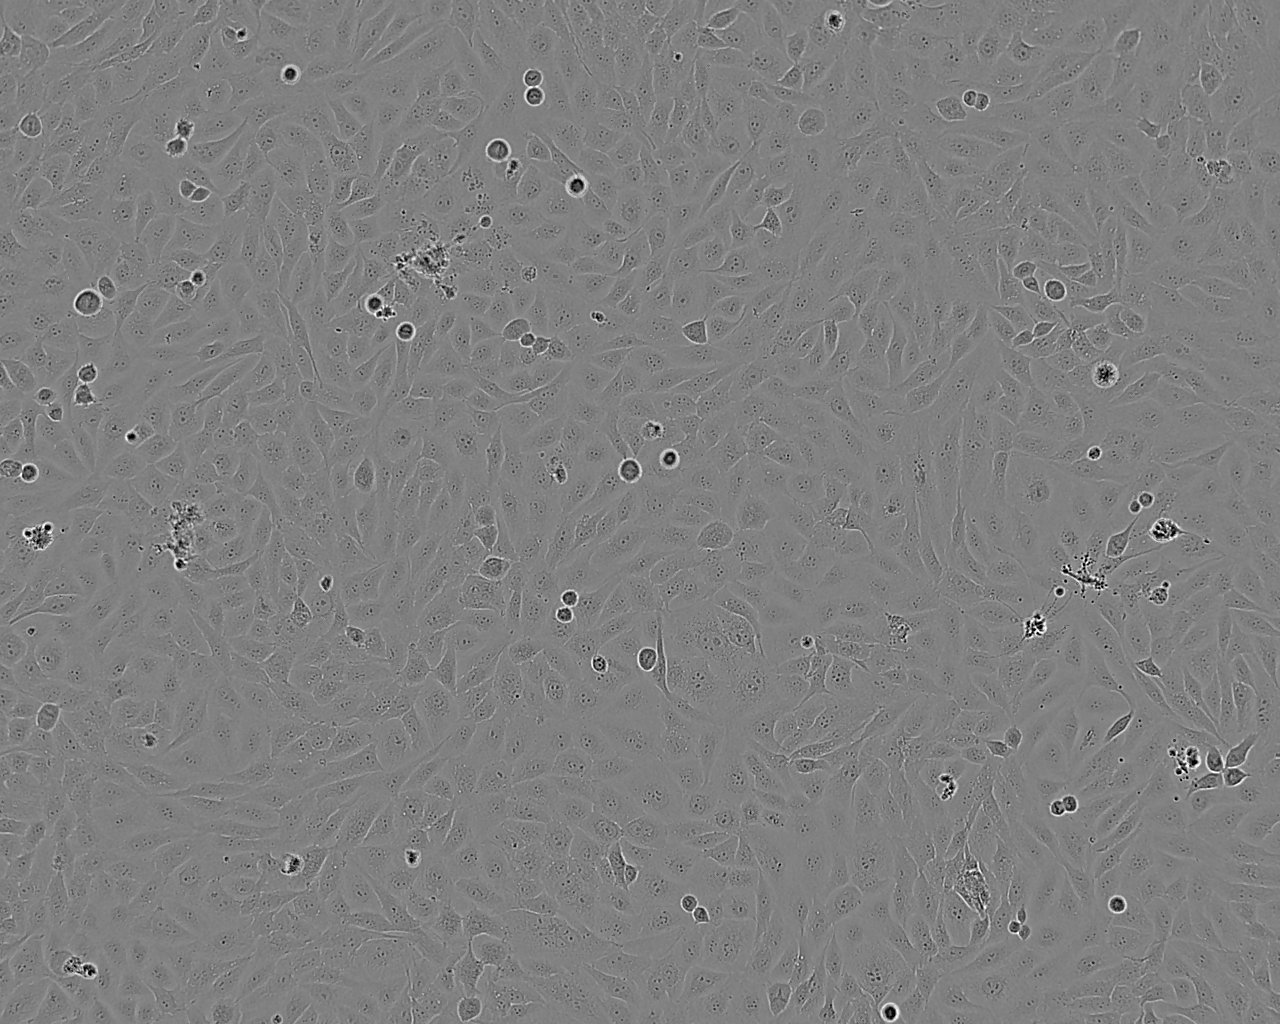 Sol8 epithelioid cells小鼠骨骼肌肌肉母细胞系,Sol8 epithelioid cells